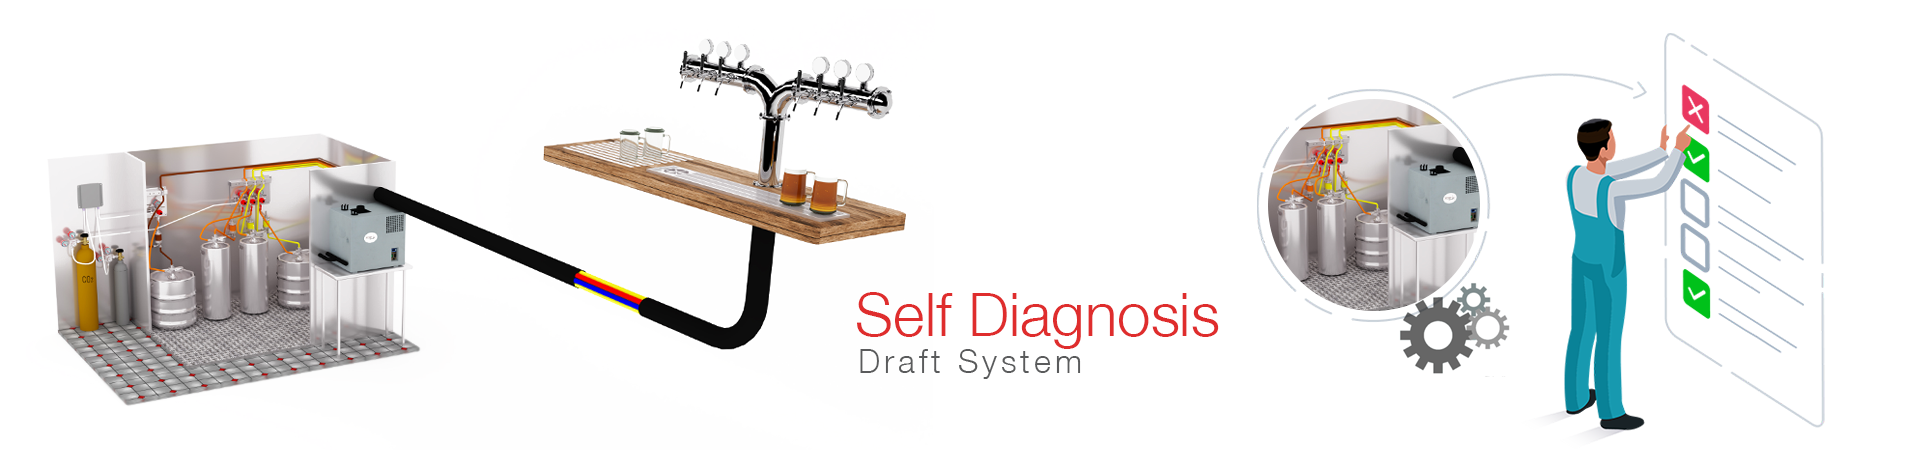 Self Diagnosis draft system